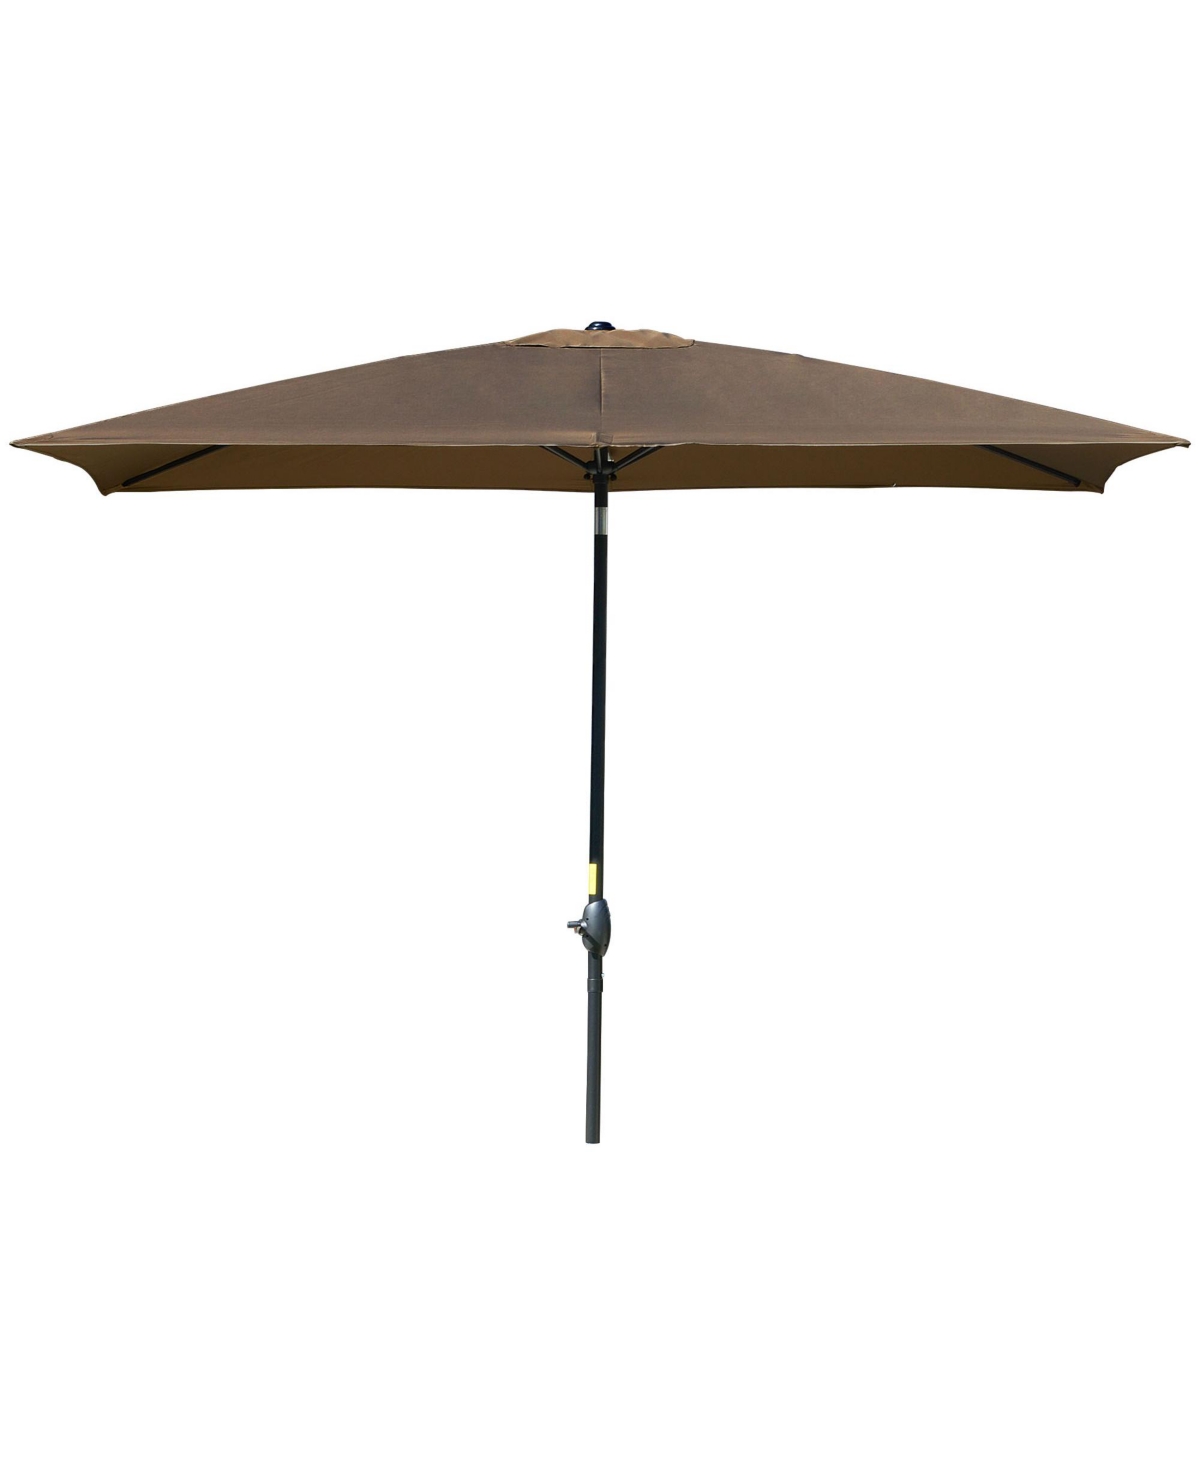 6.5' x 10' Rectangular Market Umbrella, Patio Outdoor Table Umbrella with Crank and Push Button Tilt, Coffee - Brown